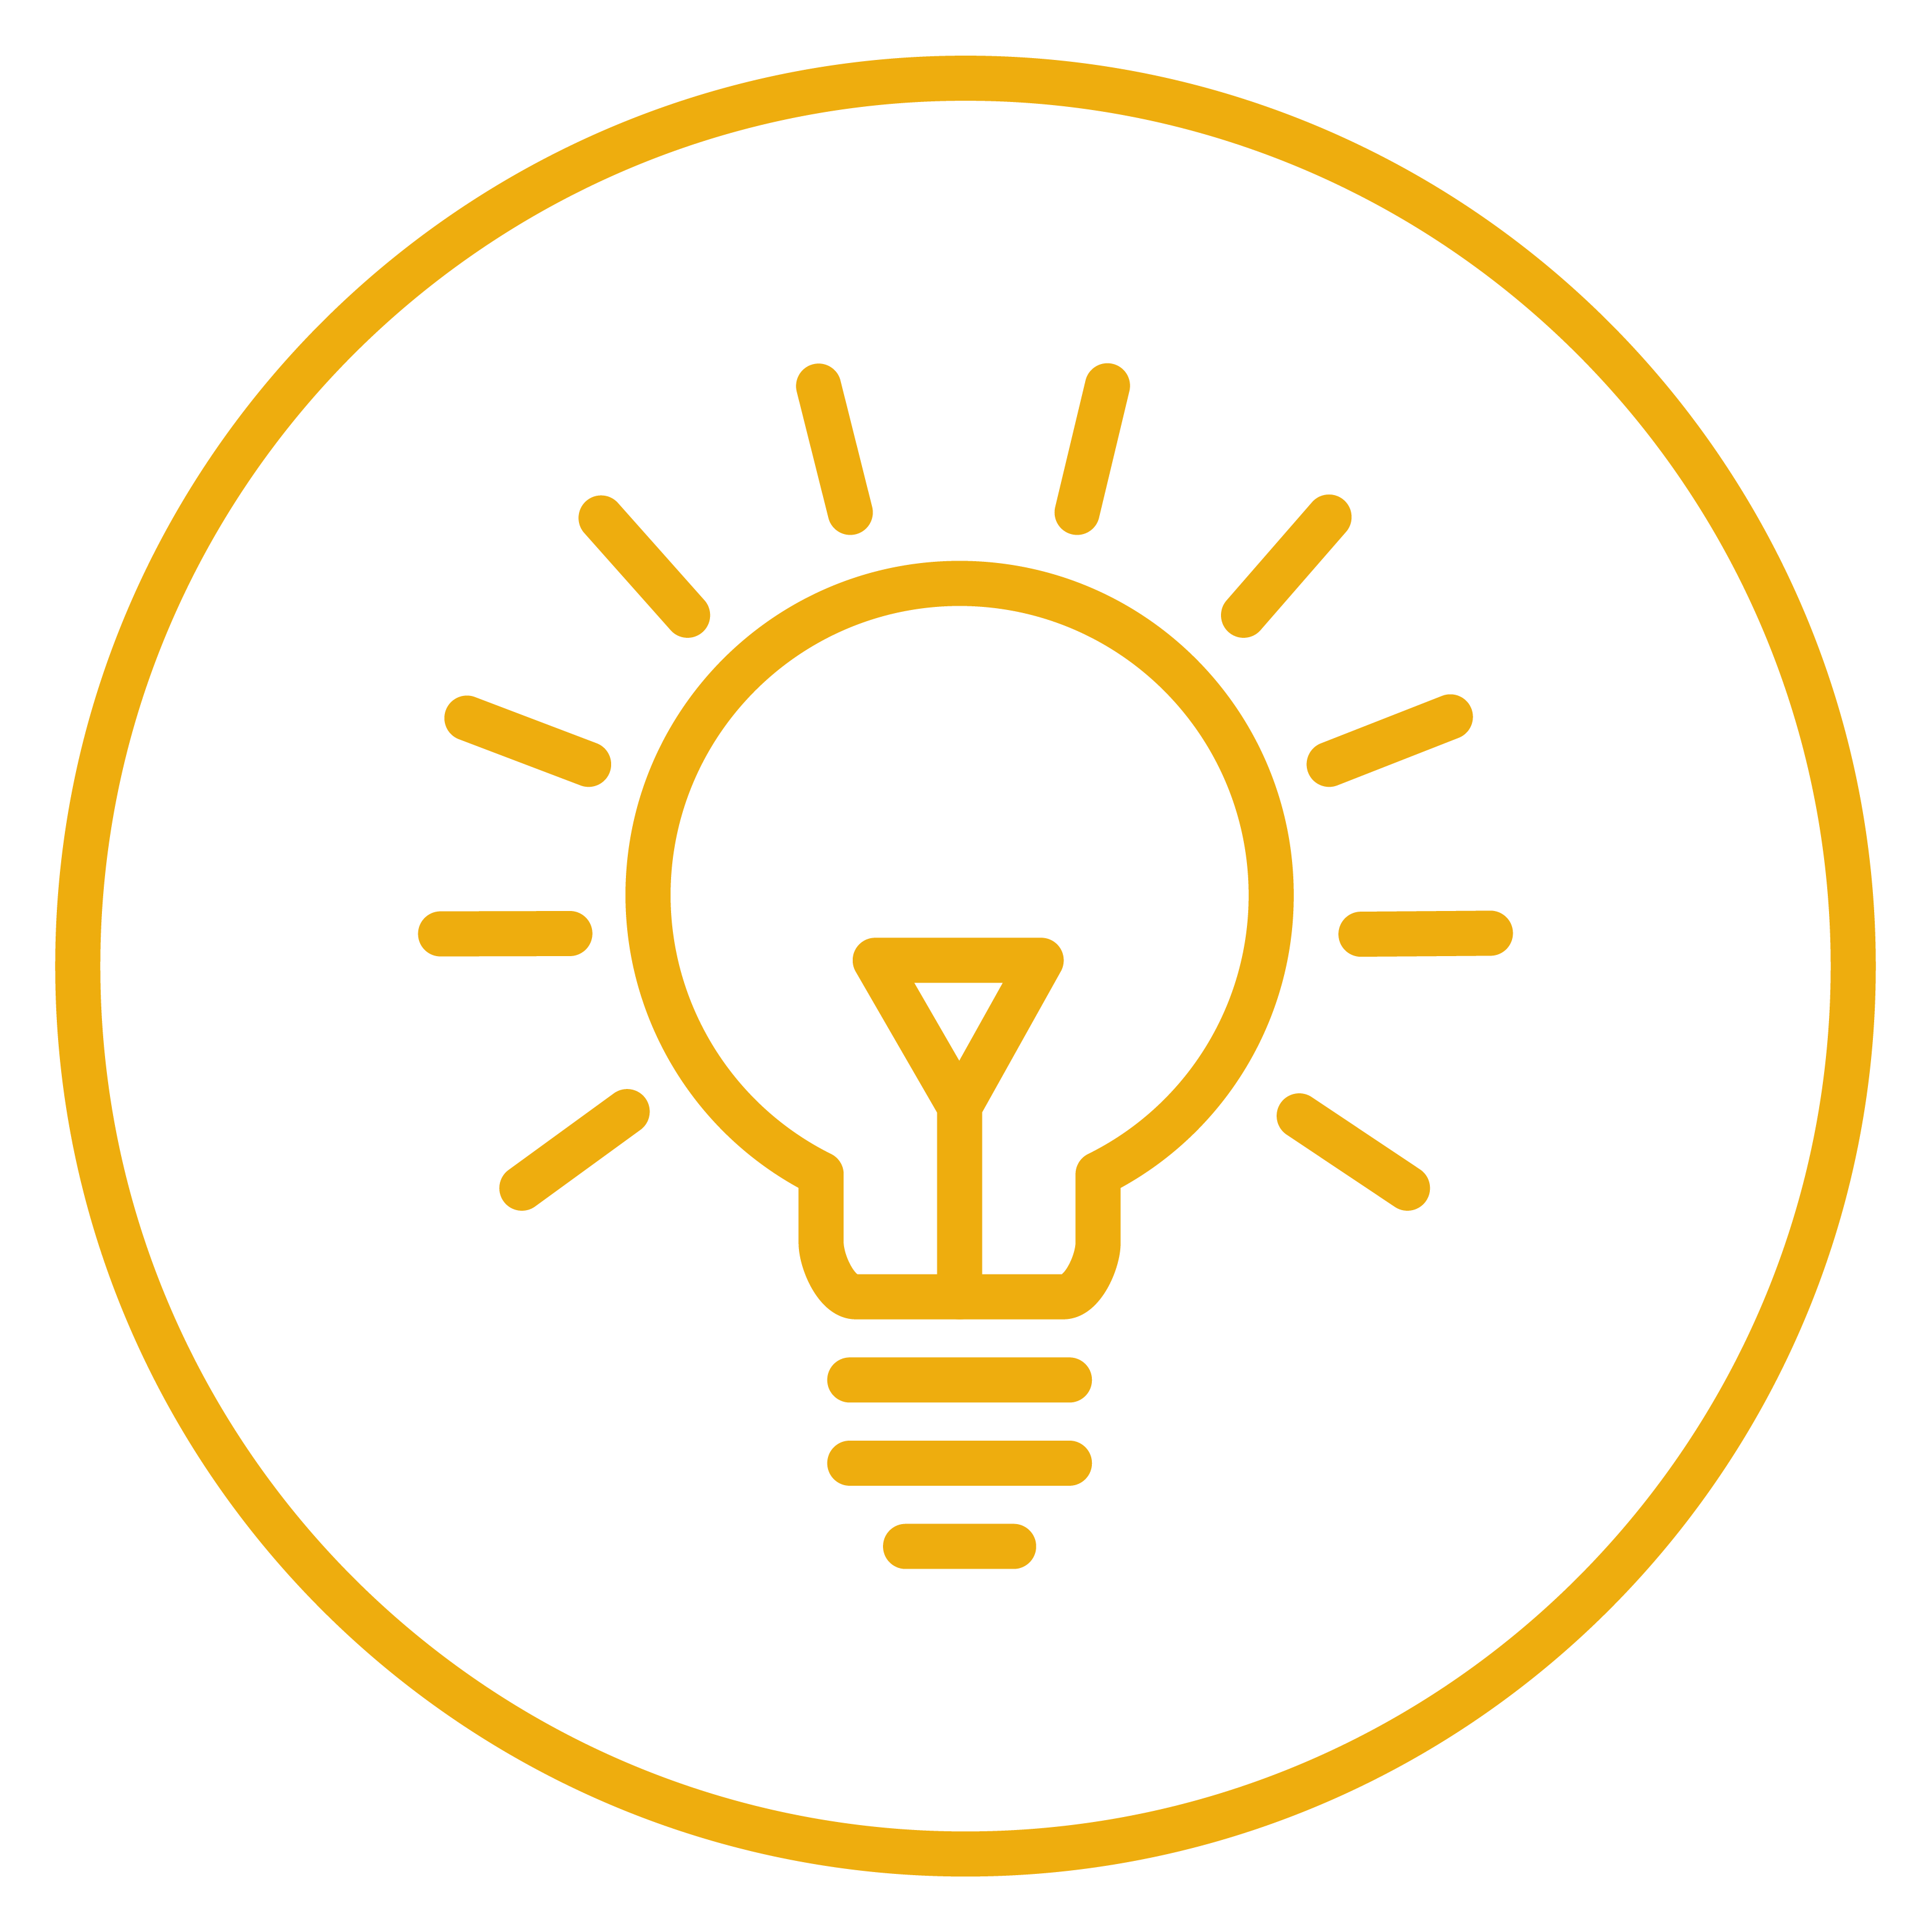 Intelligence icon showing a lightbulb